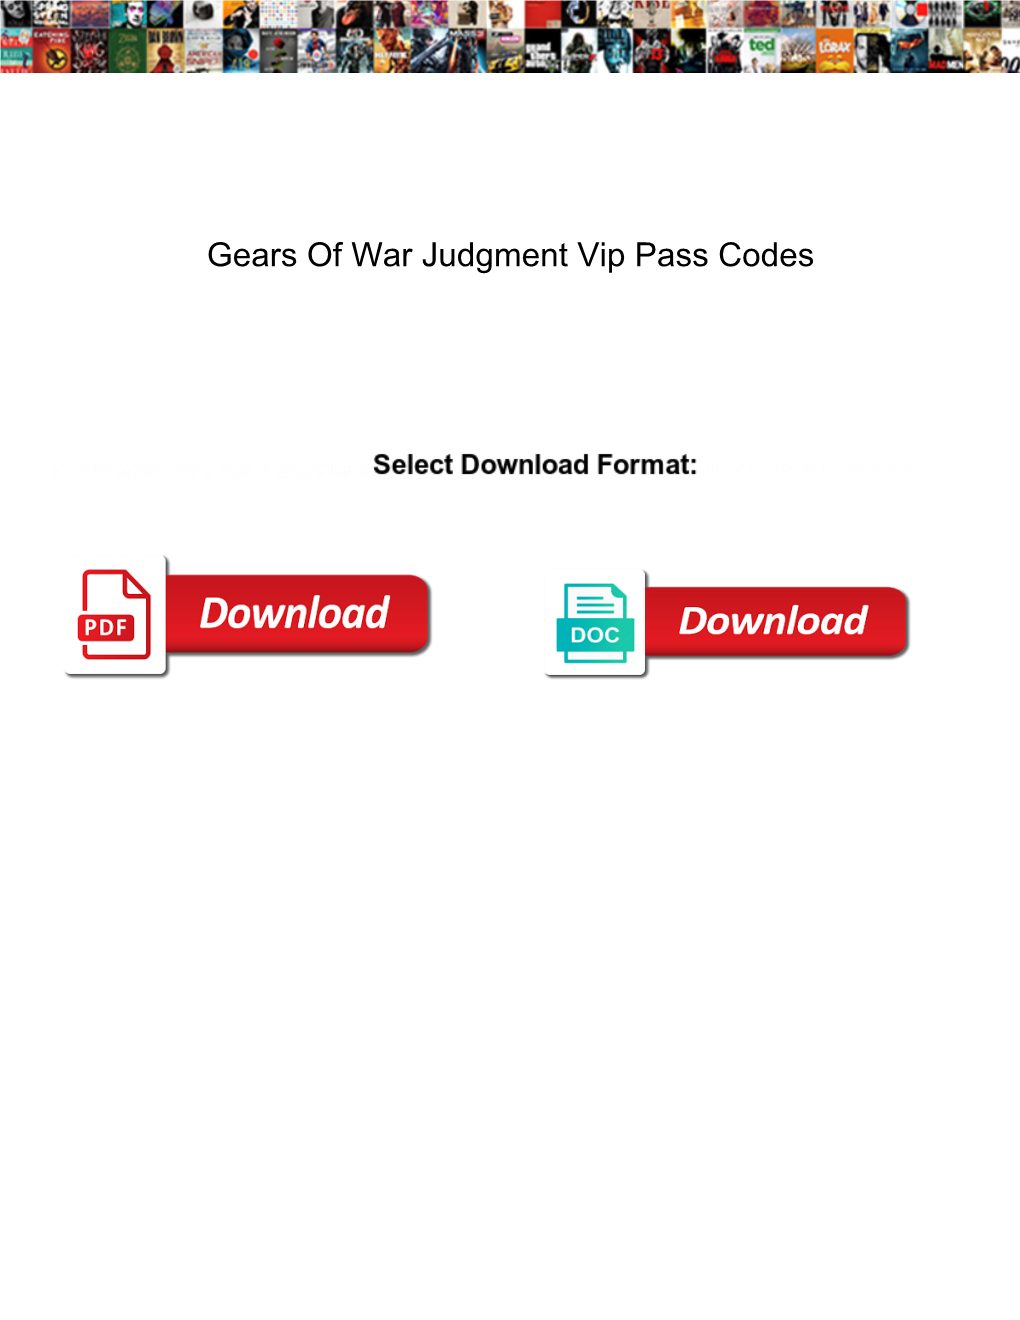 Gears of War Judgment Vip Pass Codes